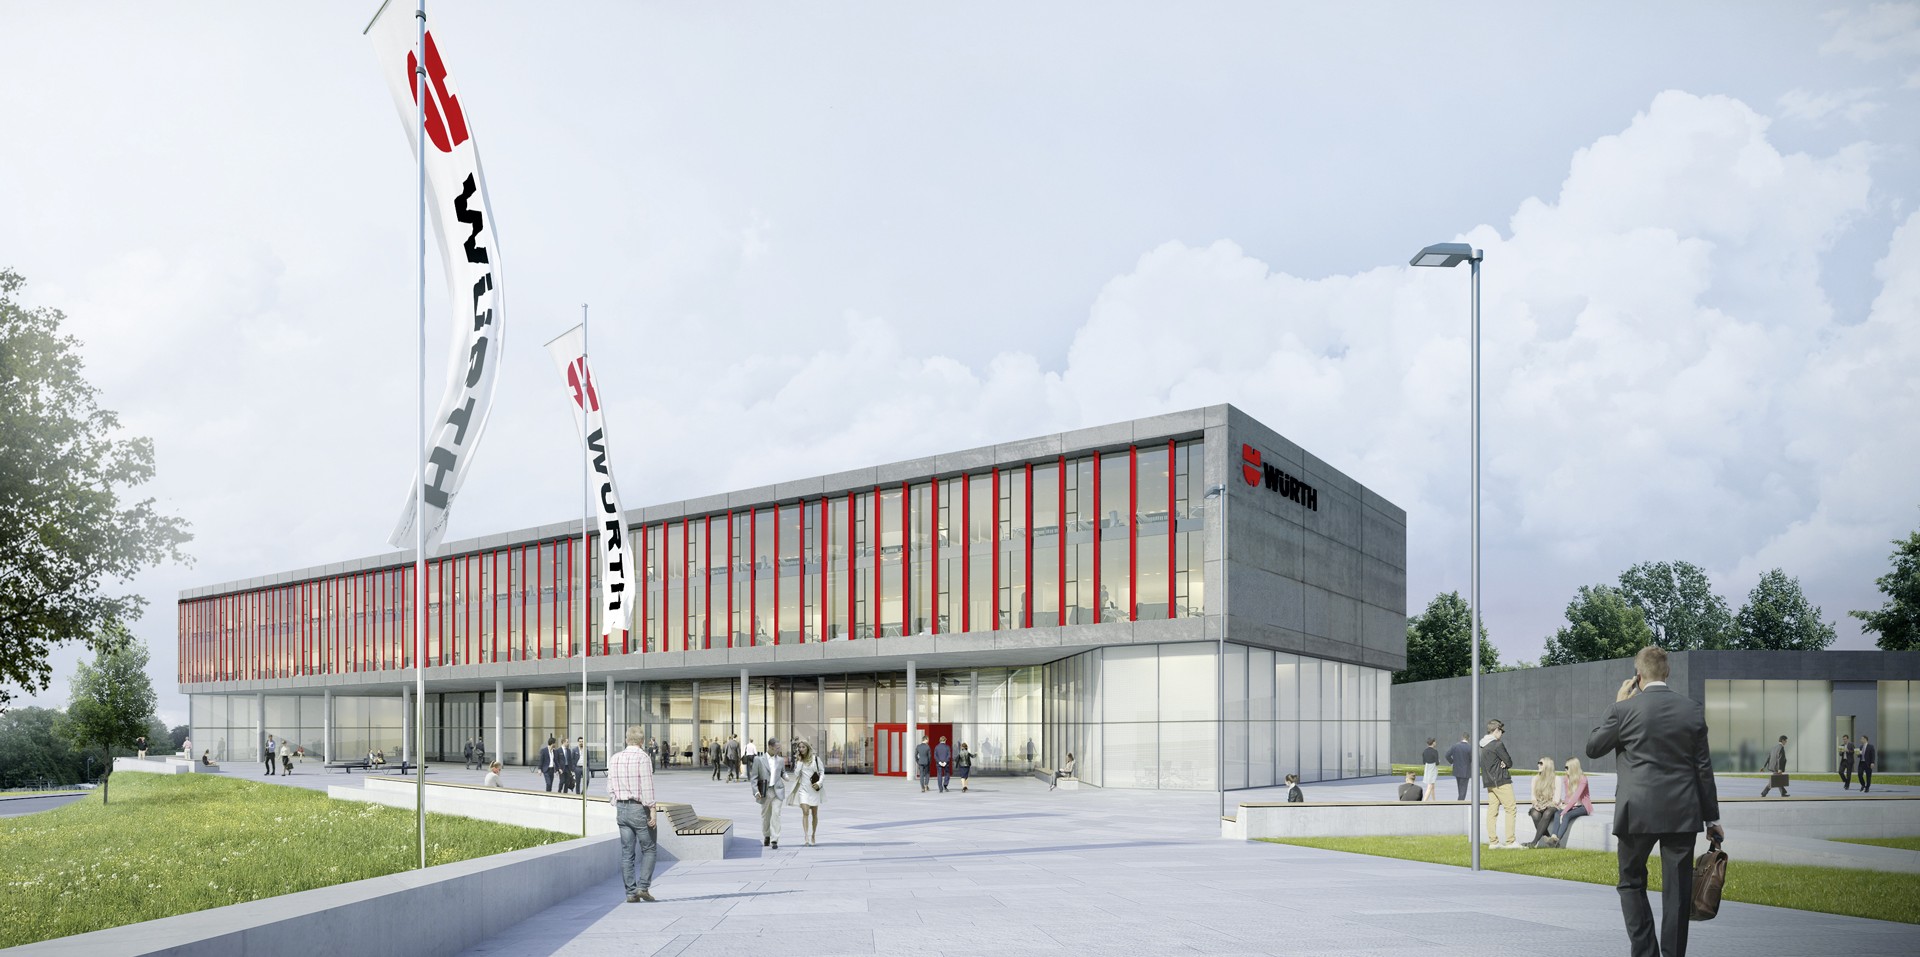 The new Würth Innovation Center 